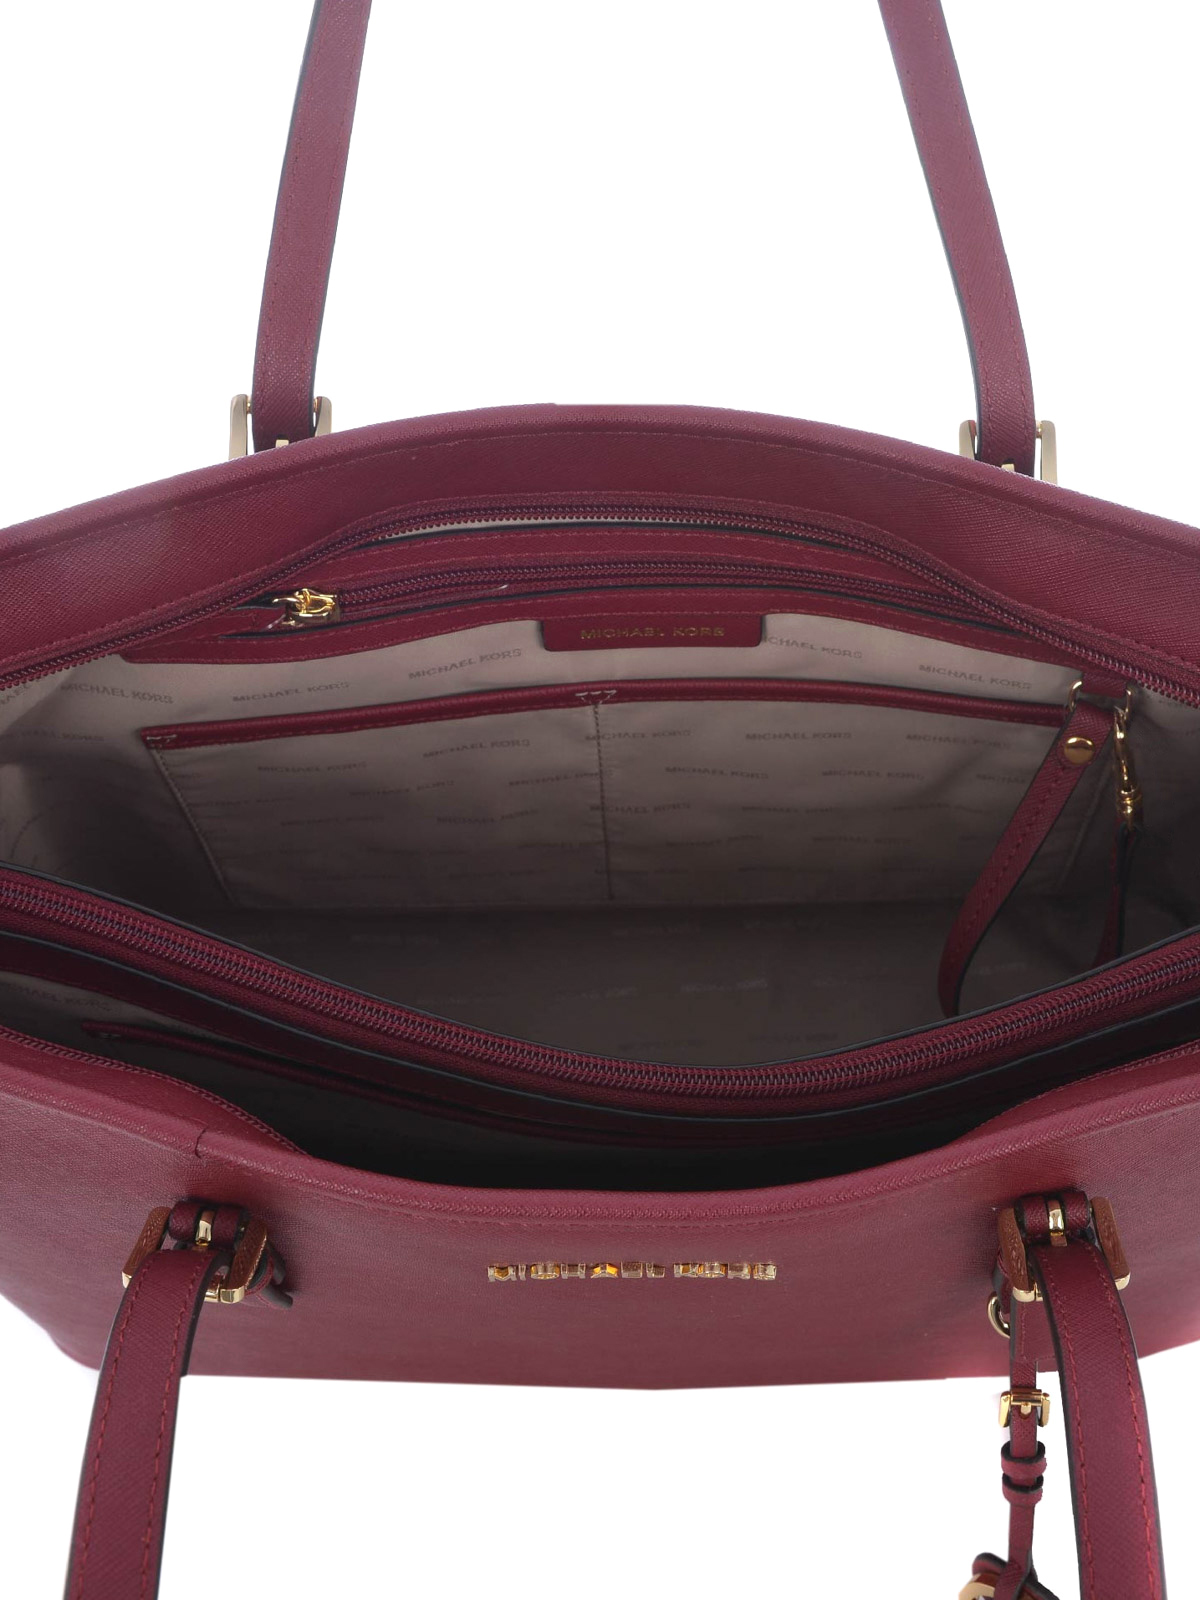 Michael Kors Jet Set Medium Mulberry Leather Crossbody Handbag